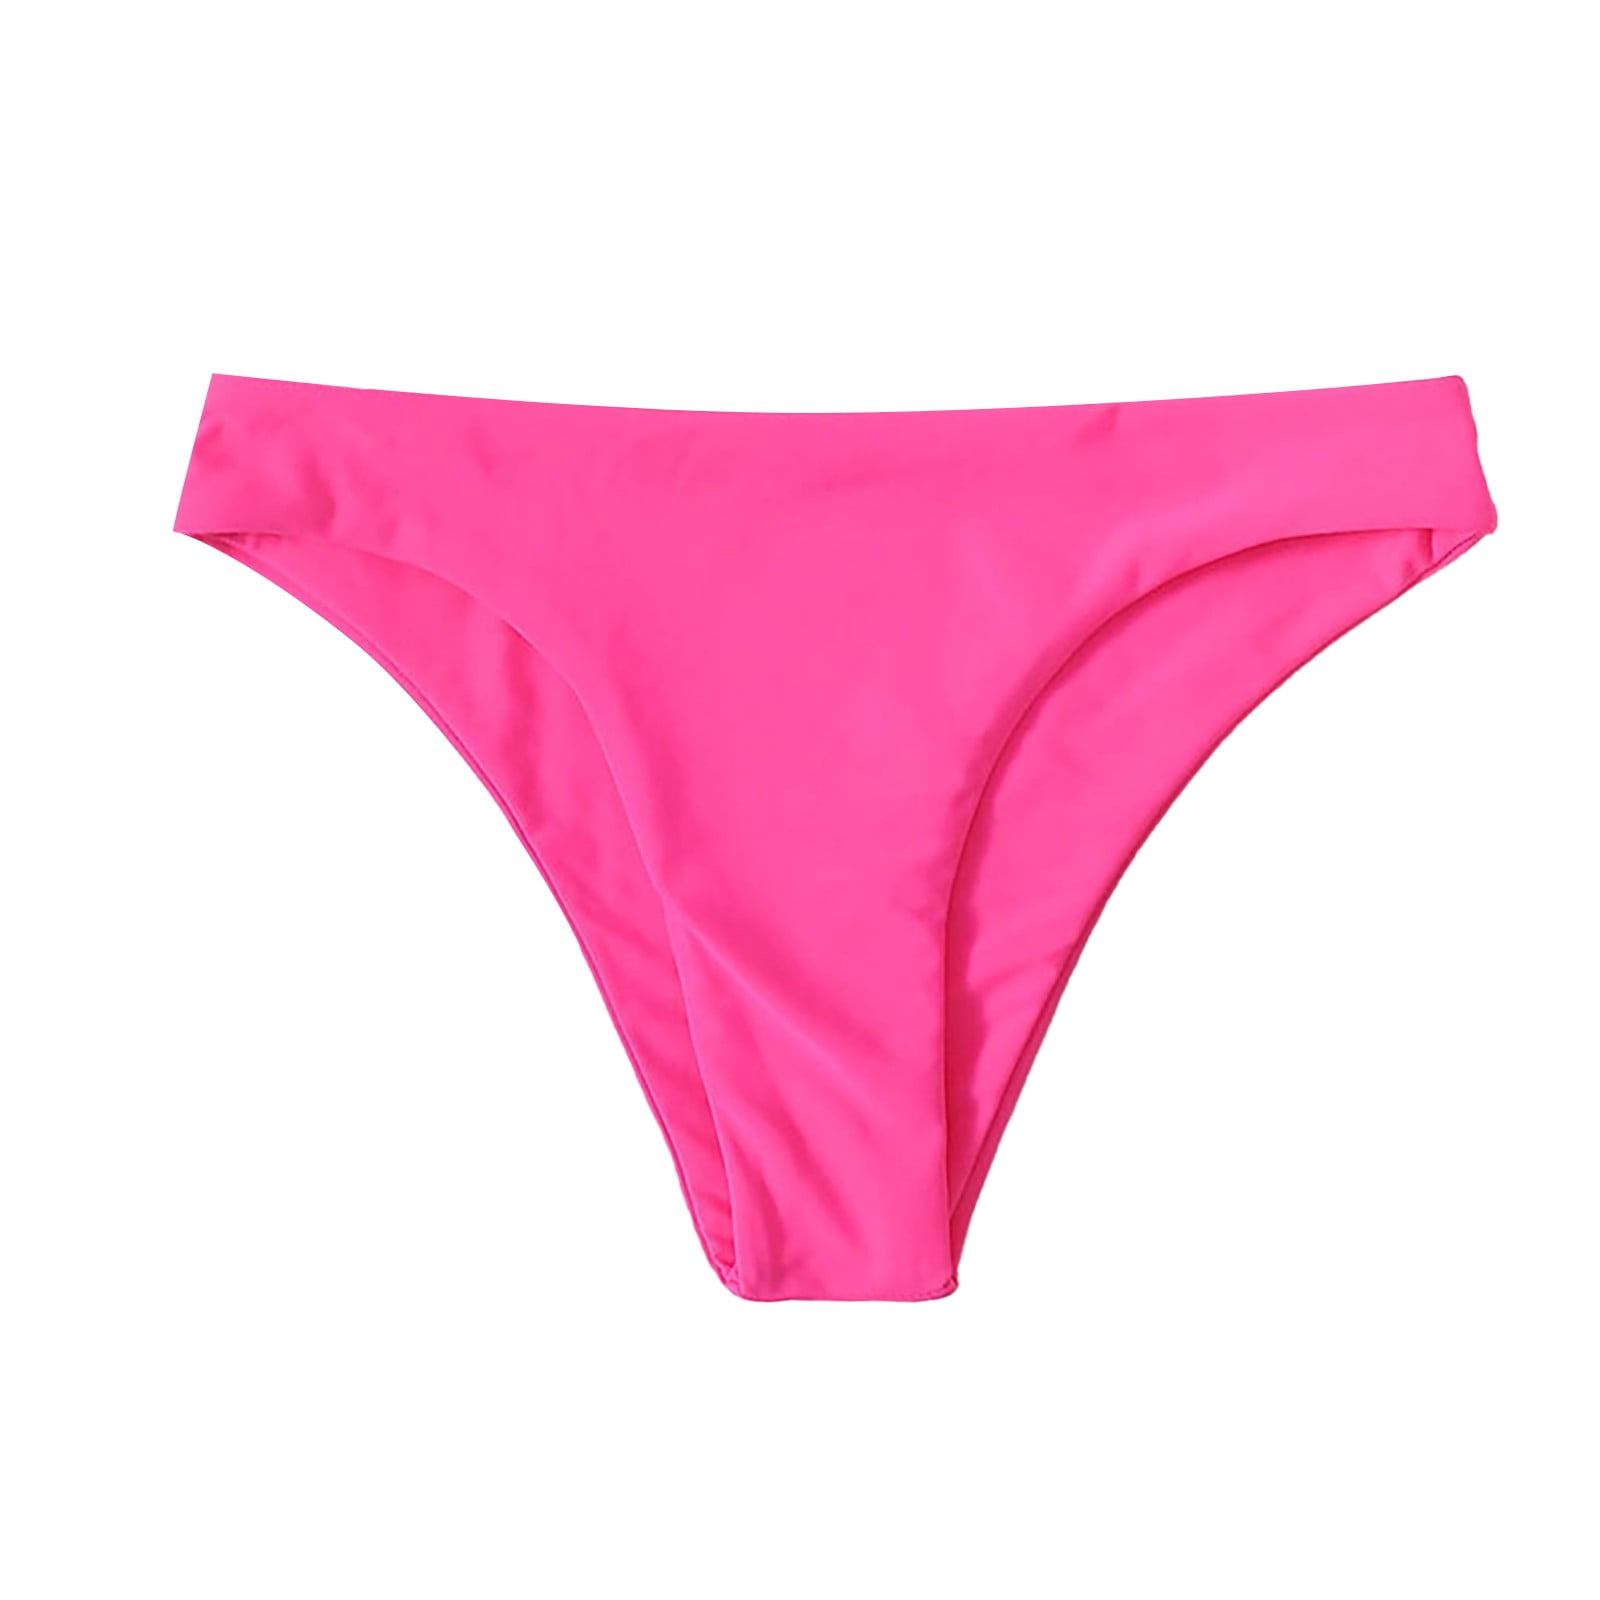 kpoplk Women's V Cut High Waisted Bikini Bottom Ribbed High Cut Cheeky  Swimsuit Bathing Suit Bottoms(S)